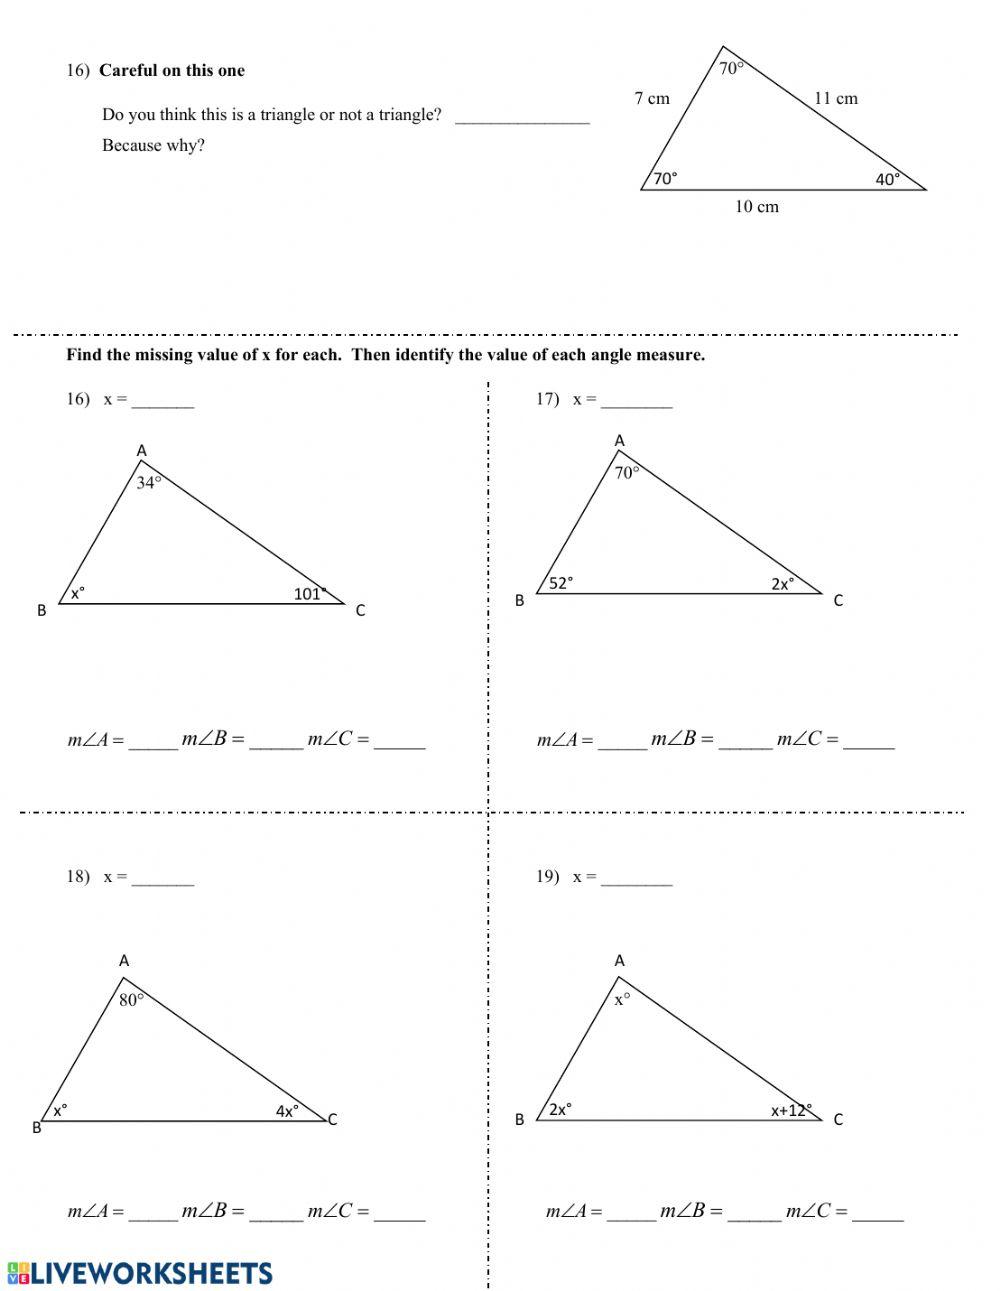 Triangle basics 3